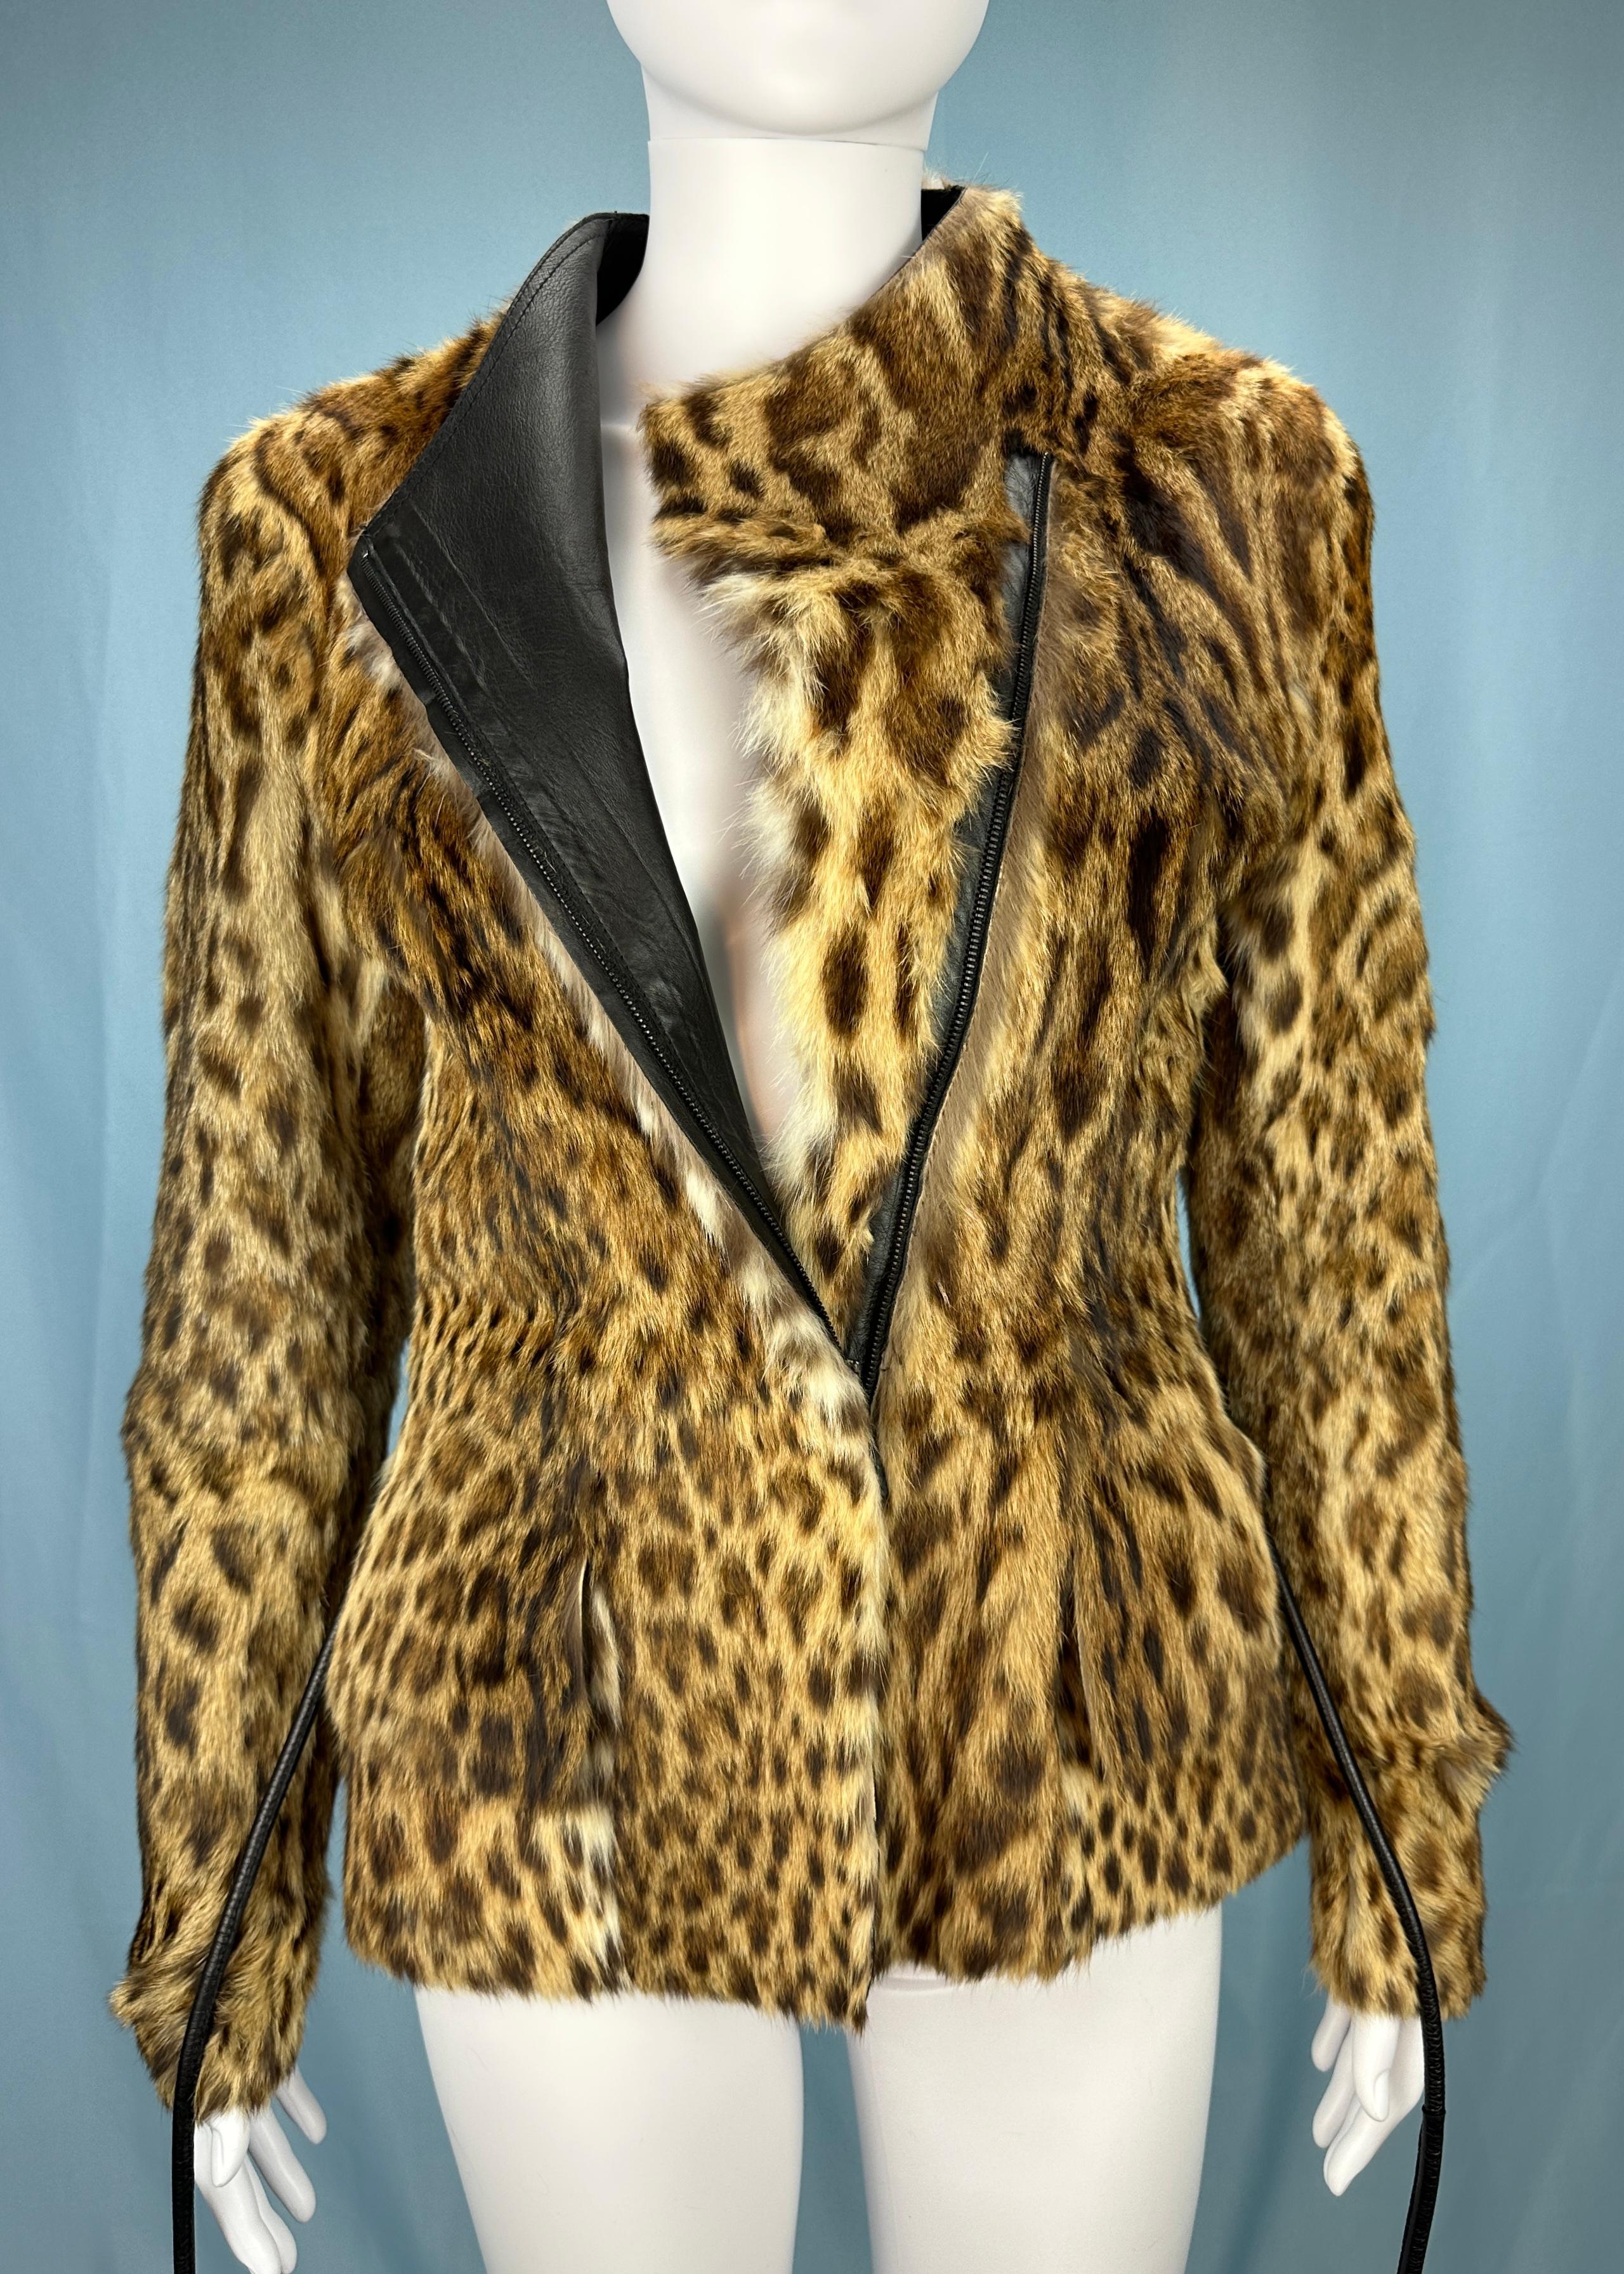 Gucci by Tom Ford Fall 1999 Runway Leopard Print Fur Jacket 1